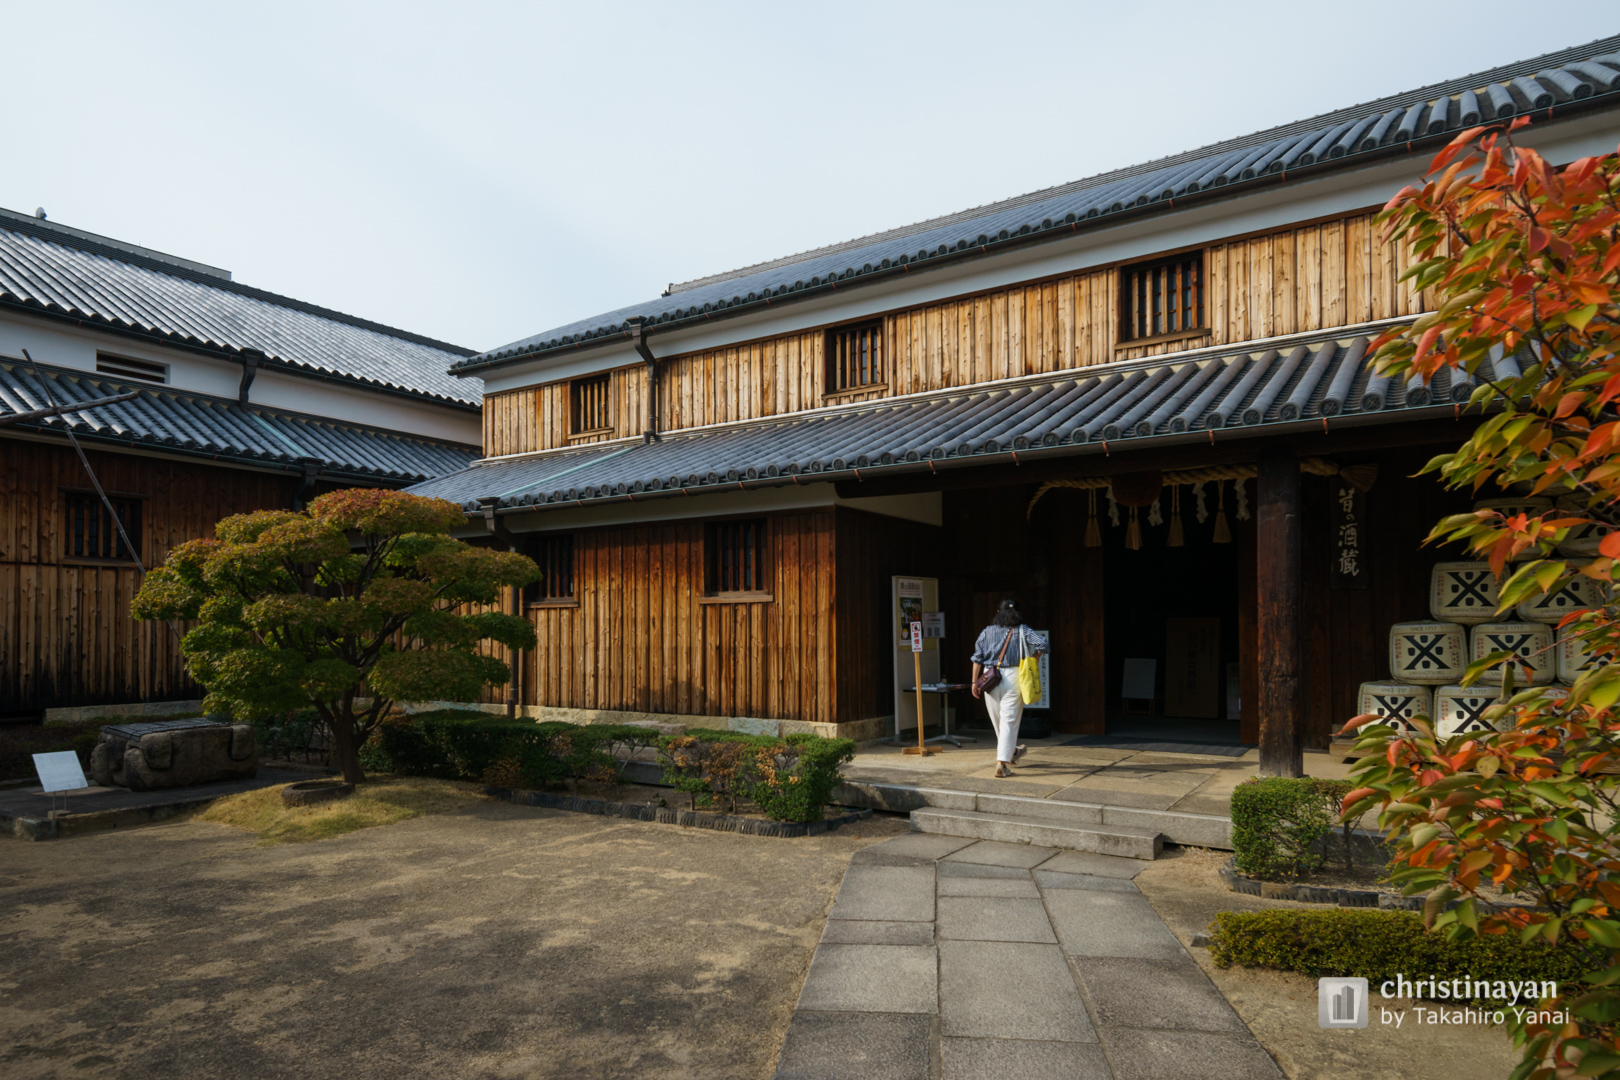 Exterior view of Sawanotsuru Museum (神戸・灘「昔の酒蔵」沢の鶴資料館)